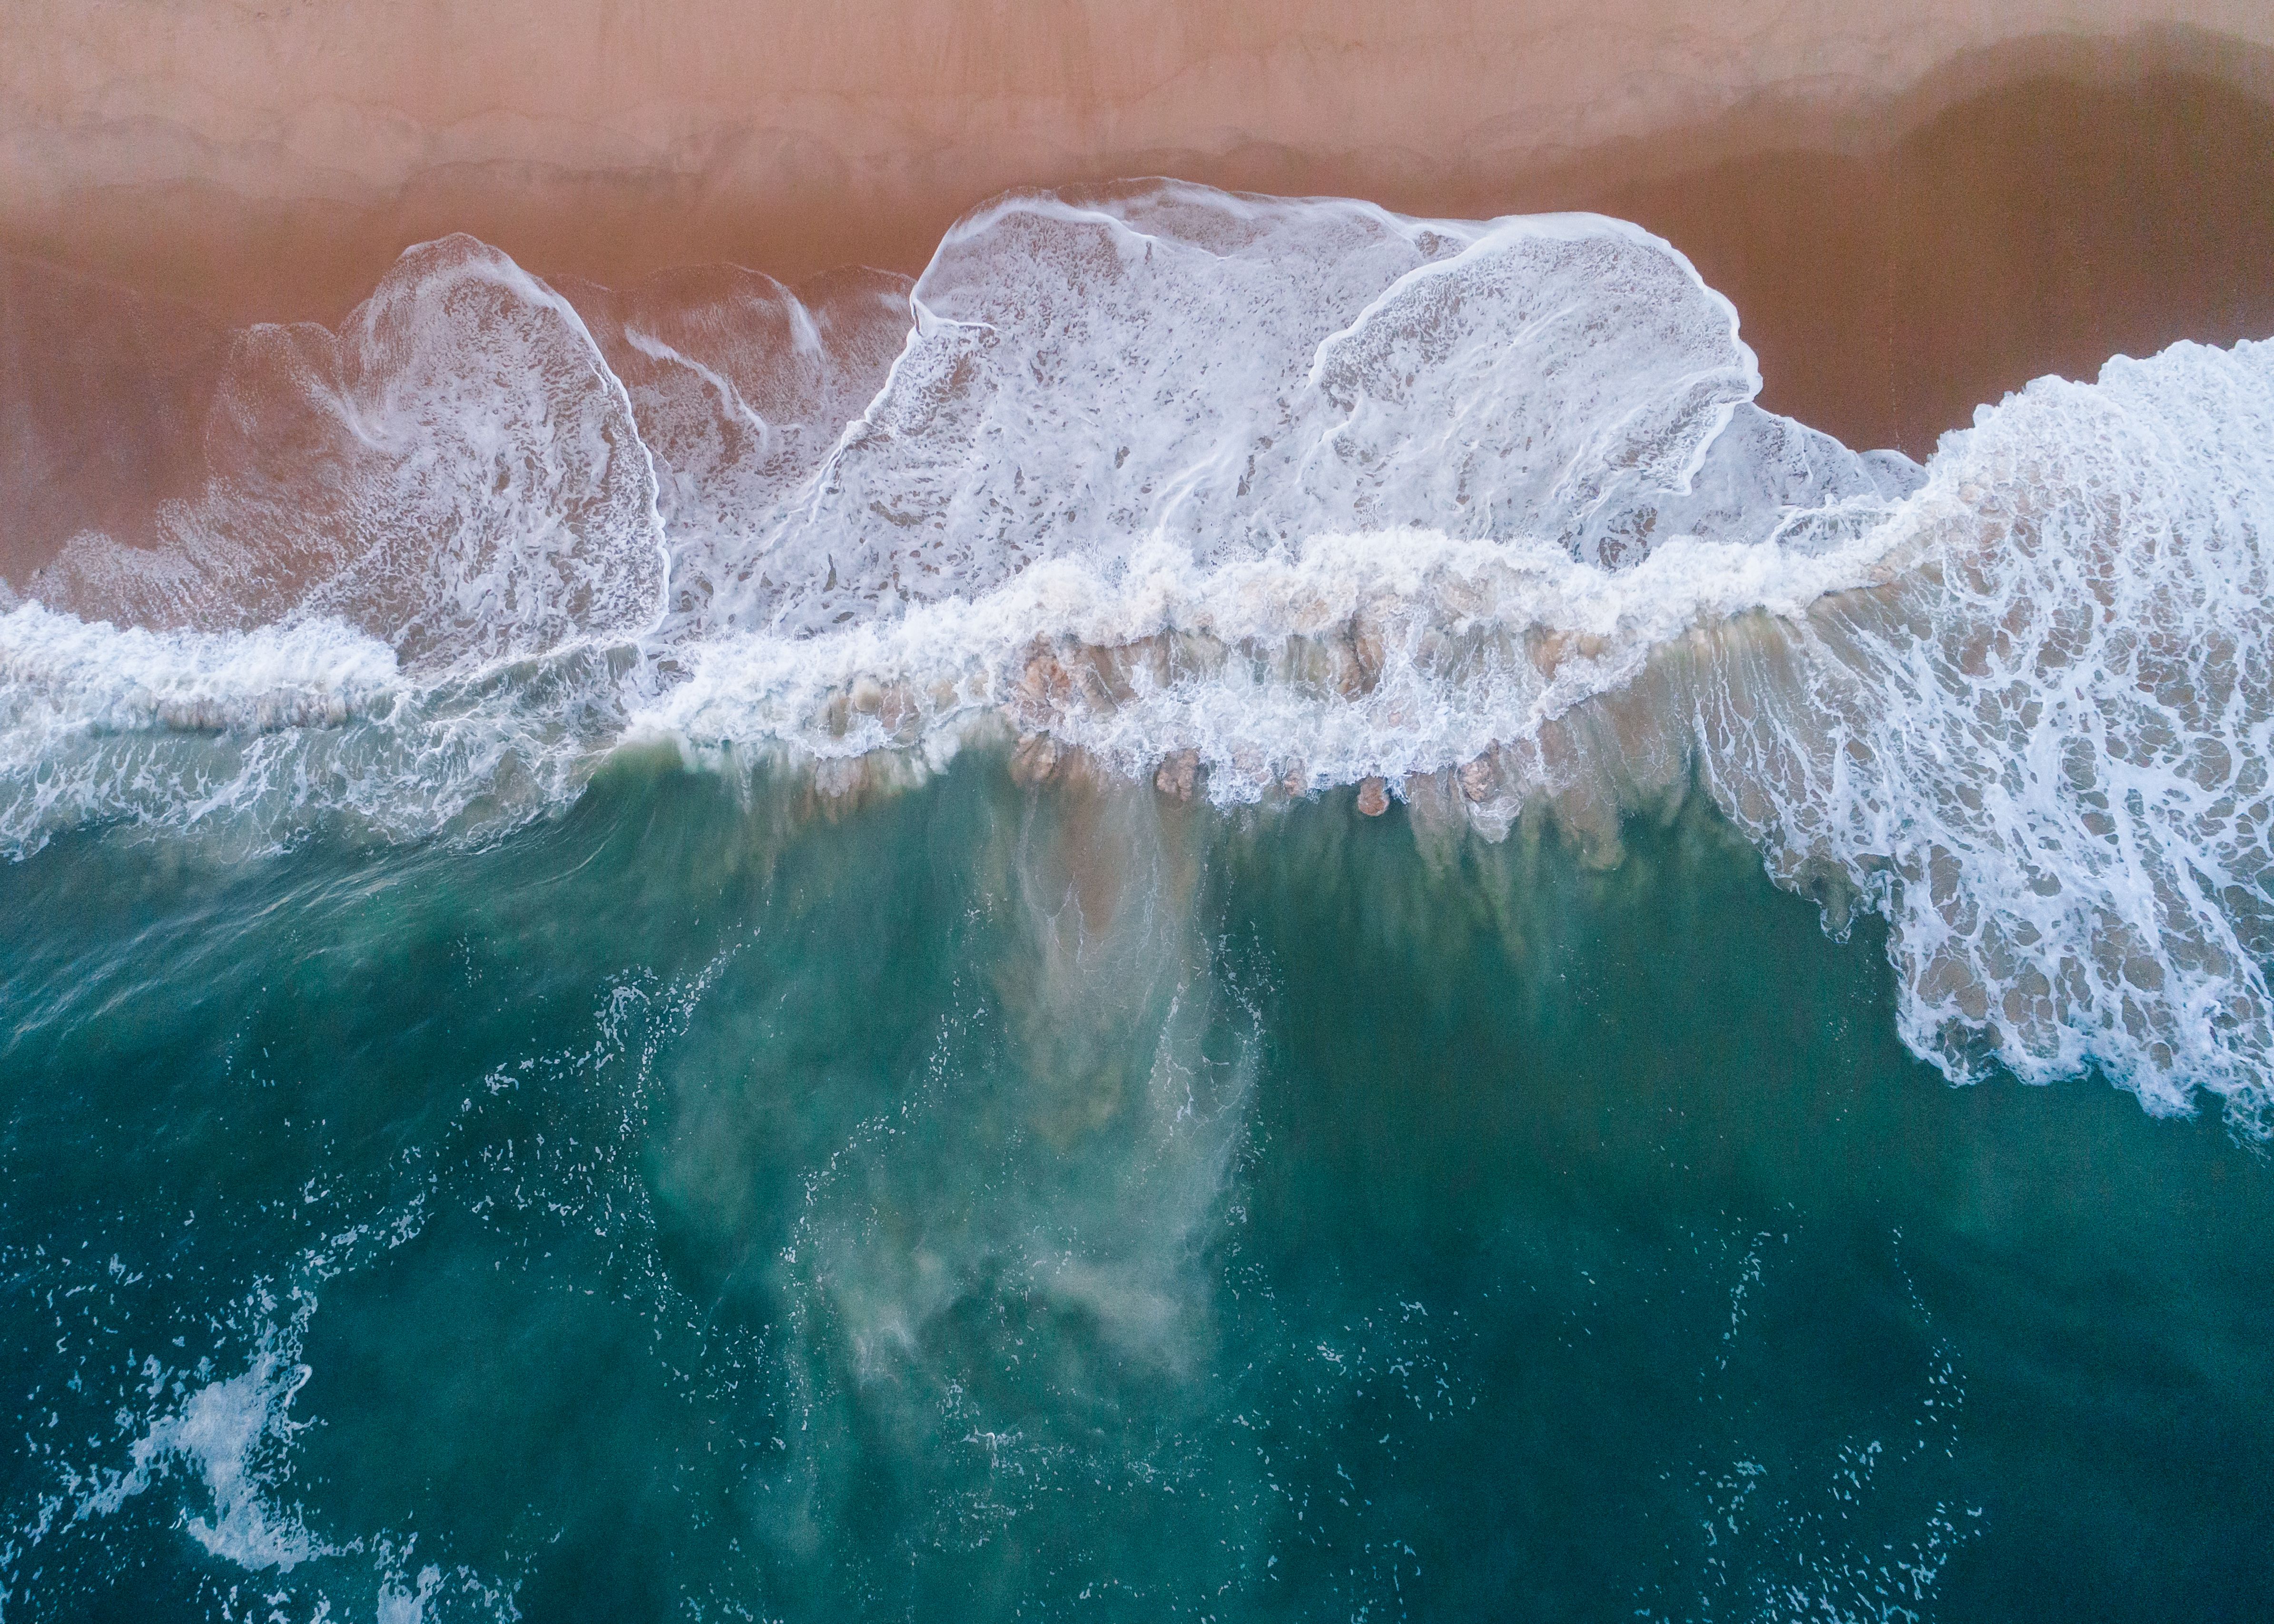 Large Waves Crashing Against a Beach in East Hampton, New York